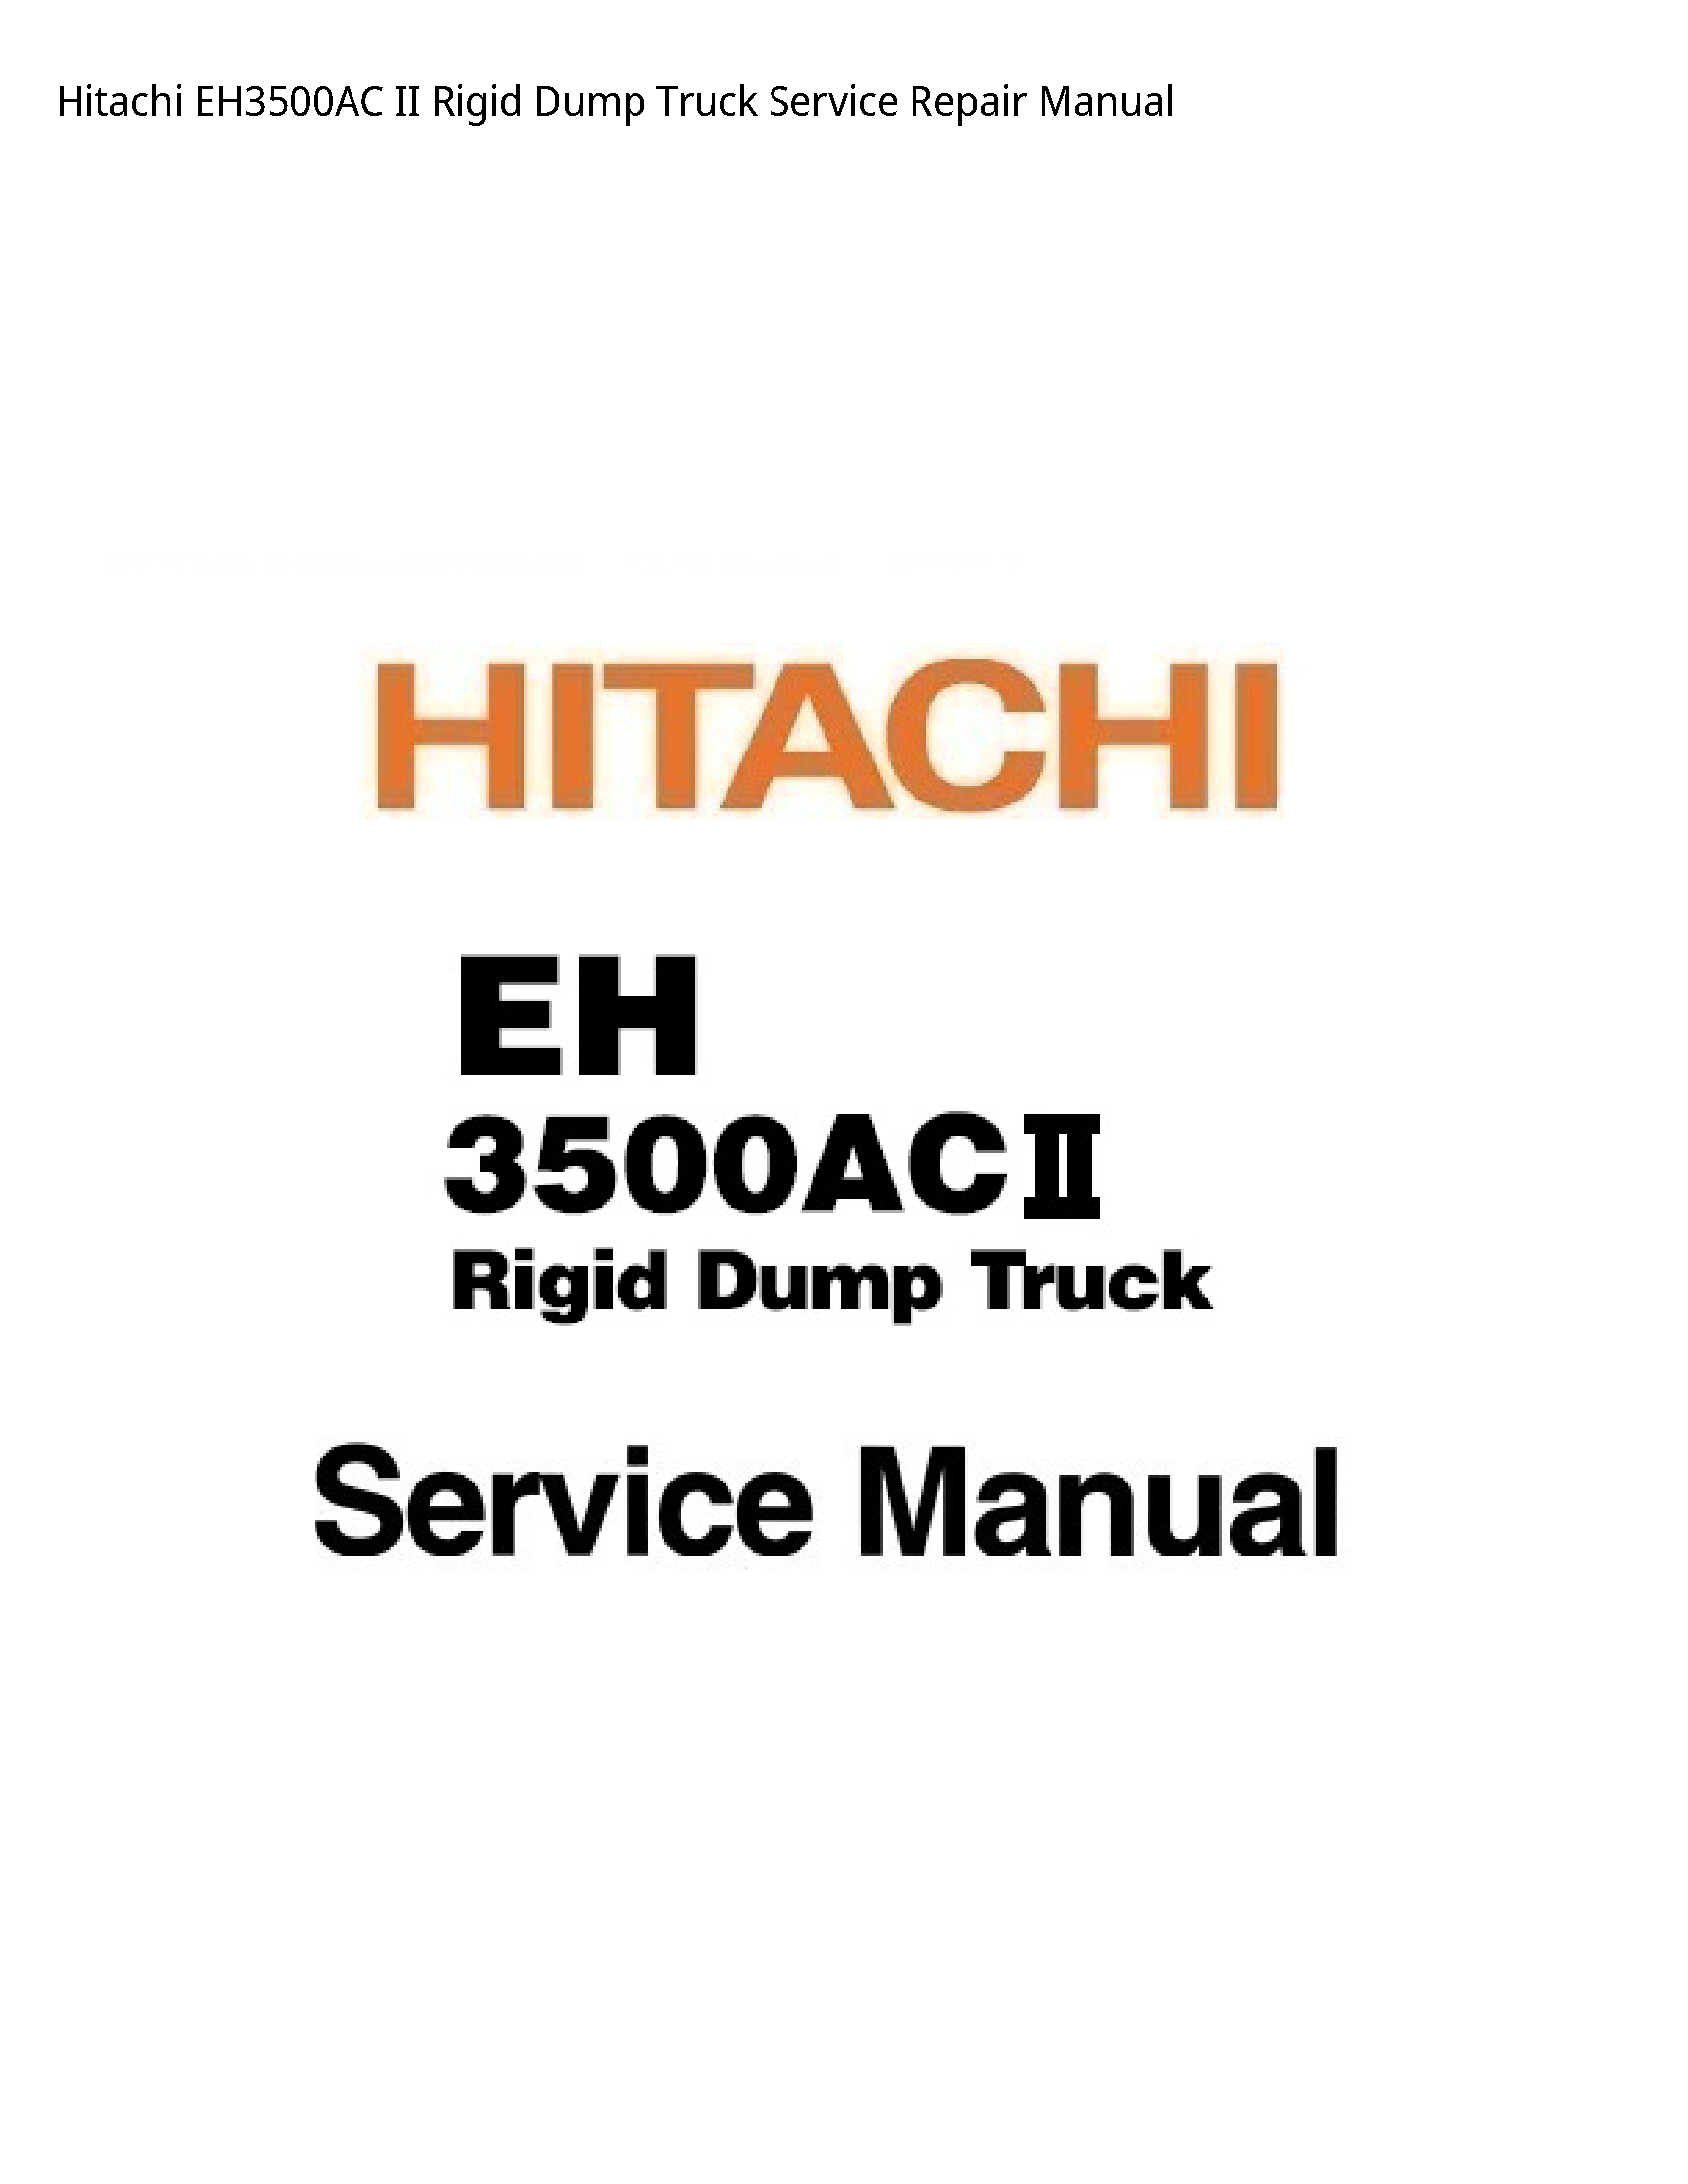 Hitachi EH3500AC II Rigid Dump Truck manual